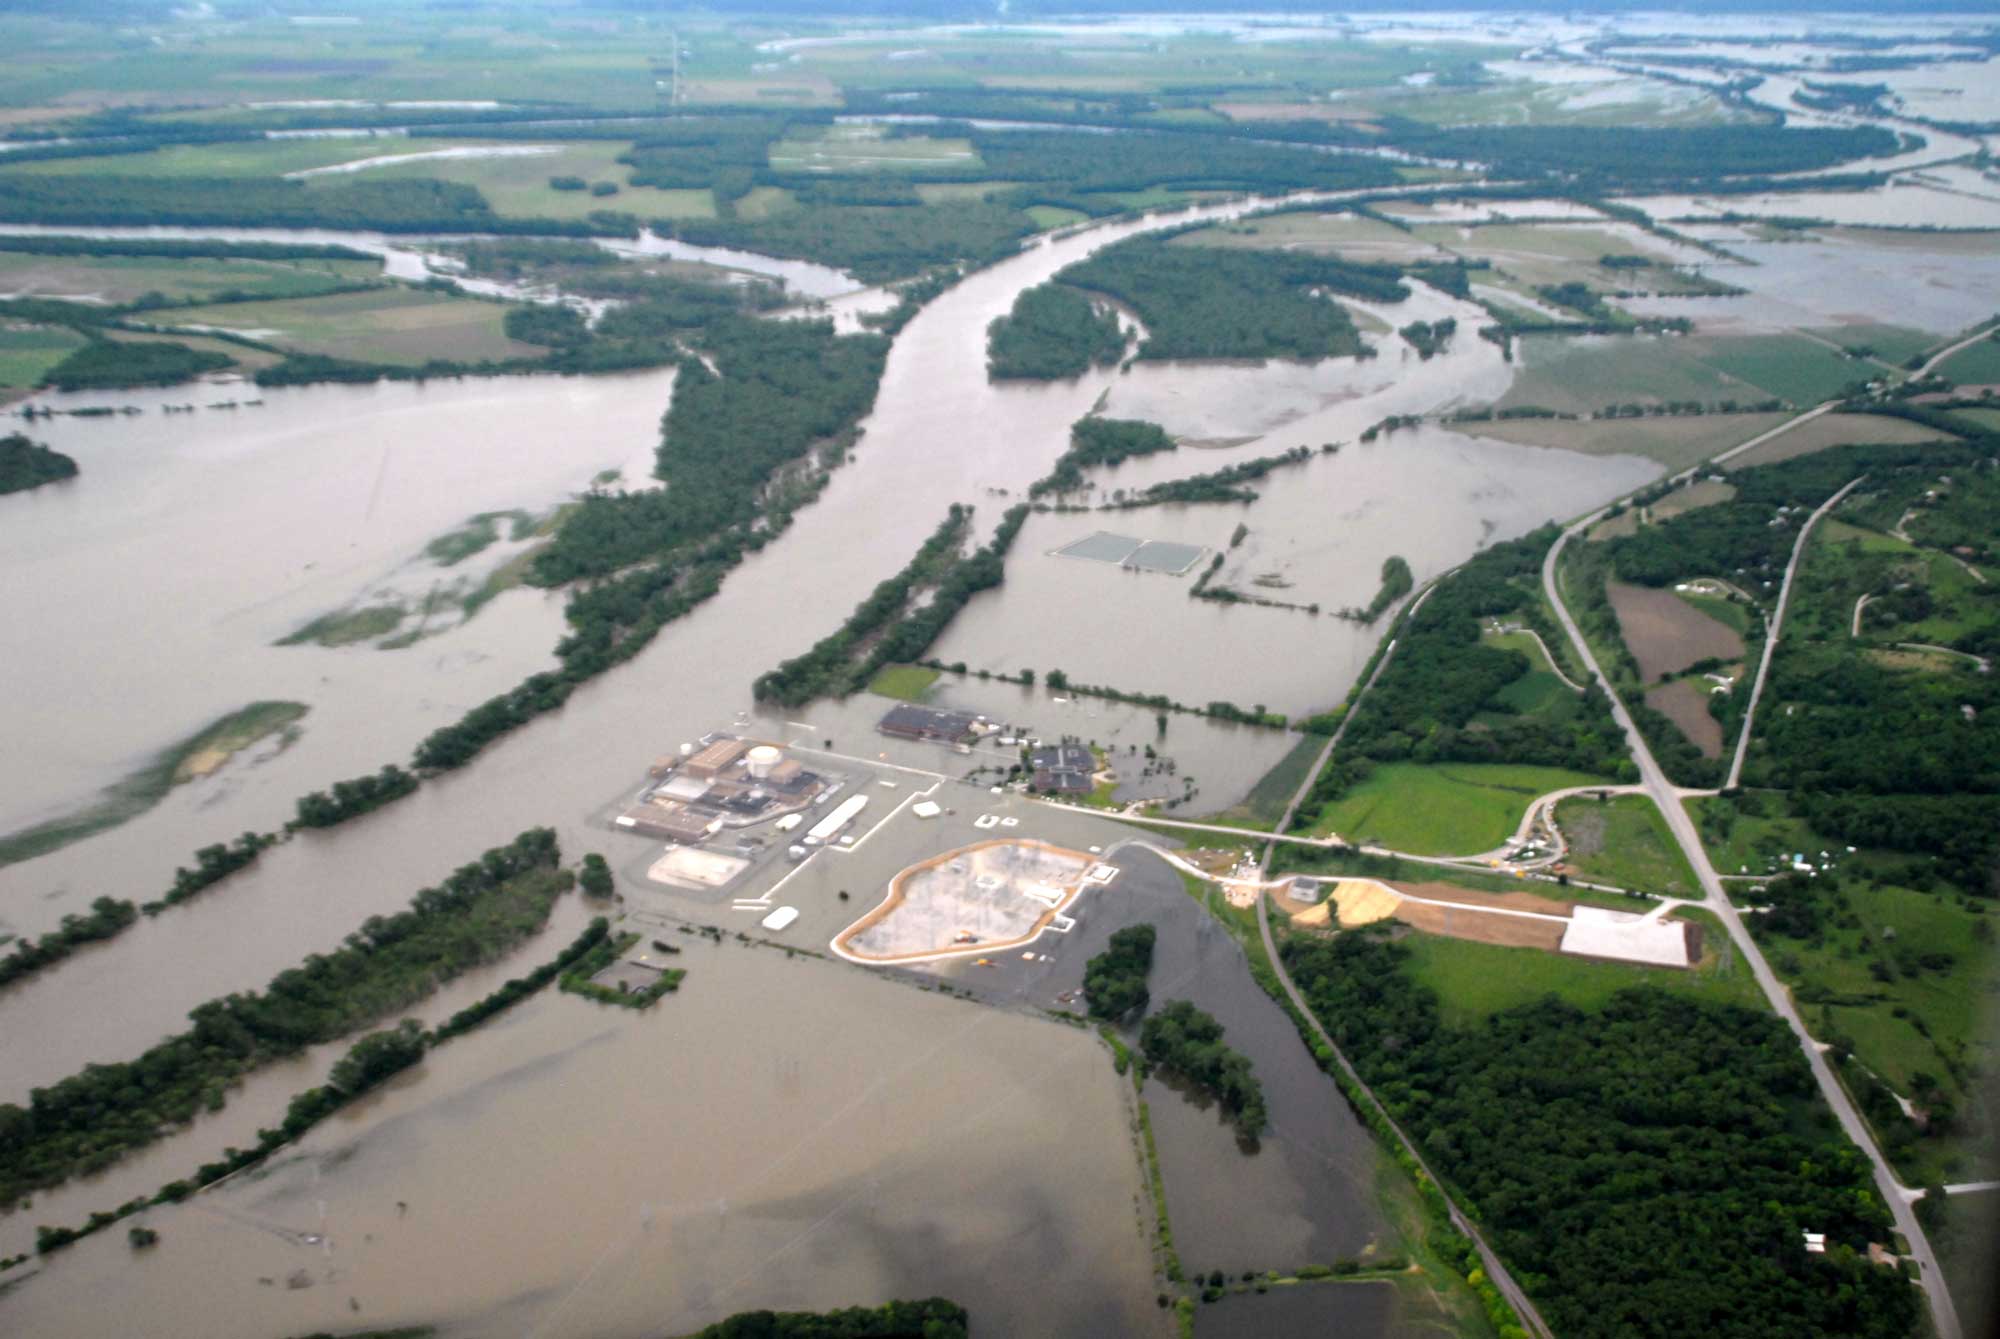 Photograph of the flooded Fort Calhoun Nuclear Reactor in Nebraska following the 2011 Missouri River Flood.